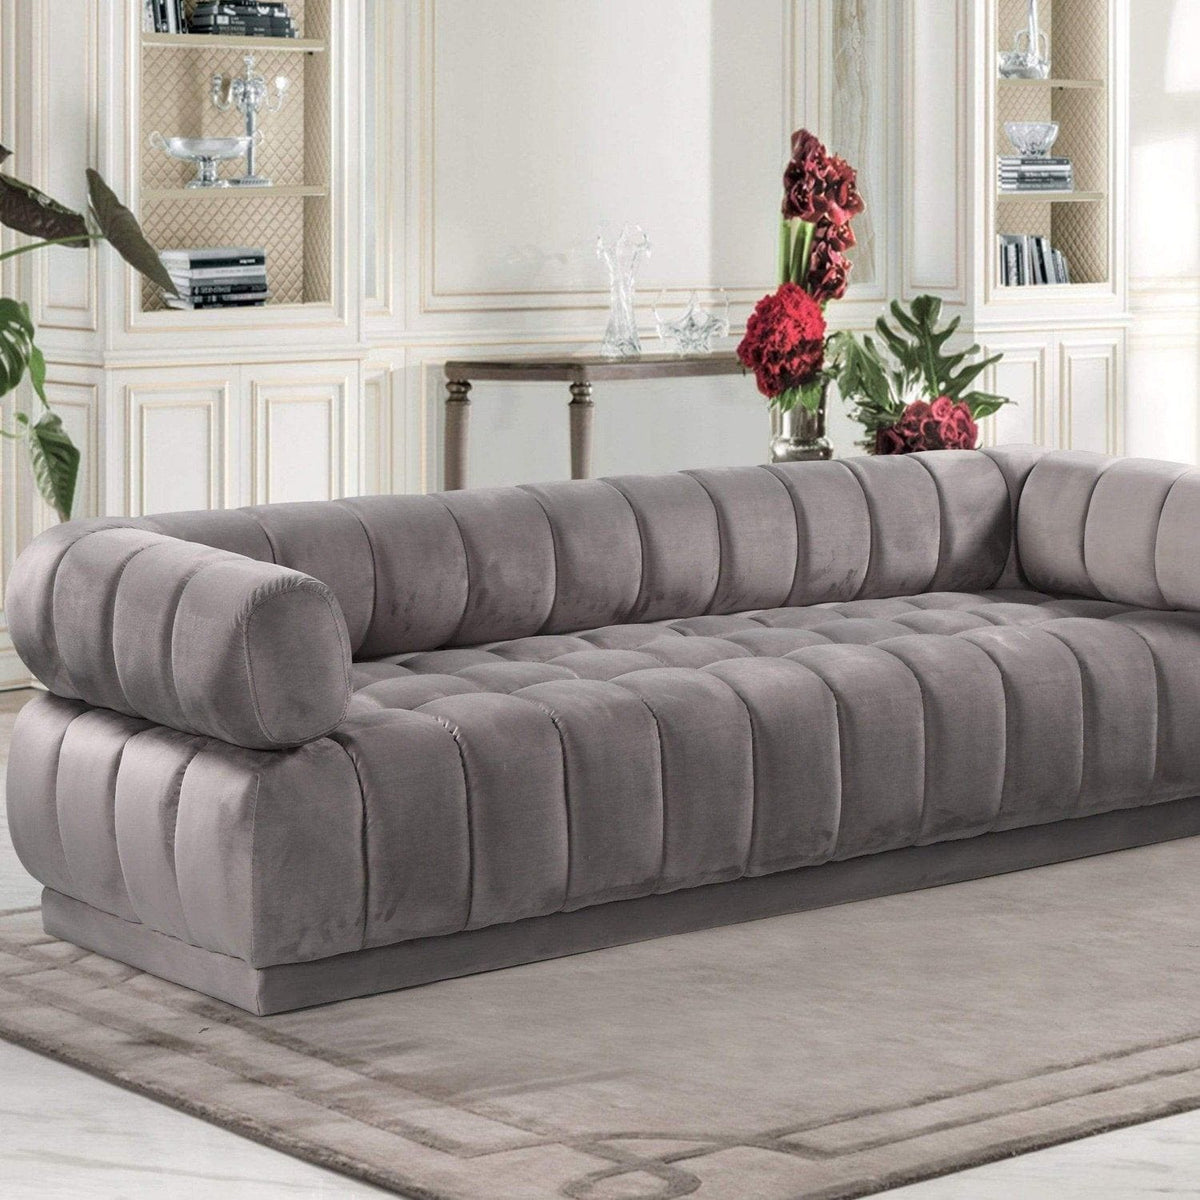 Iconic Home Quebec Sofa Velvet Upholstered Vertical Channel-Quilted Shelter Arm Tufted Design Grey